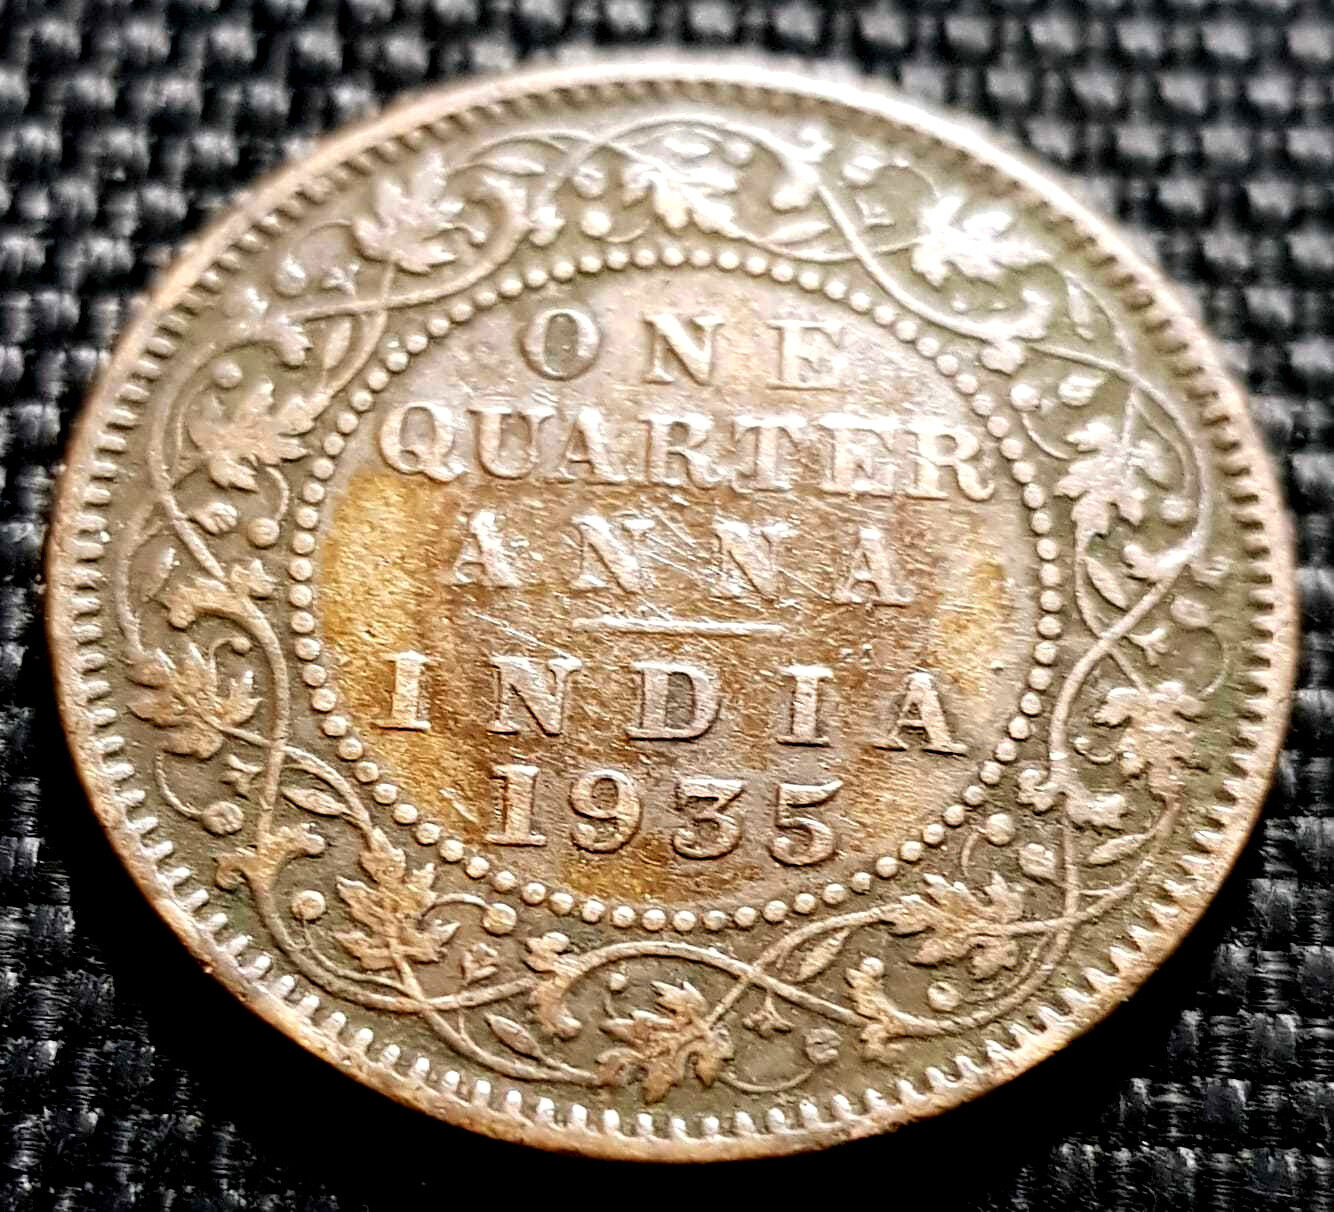 1935 British India George V One Quarter (1/4) Anna coin,F (+FREE 1 coin) #D5744